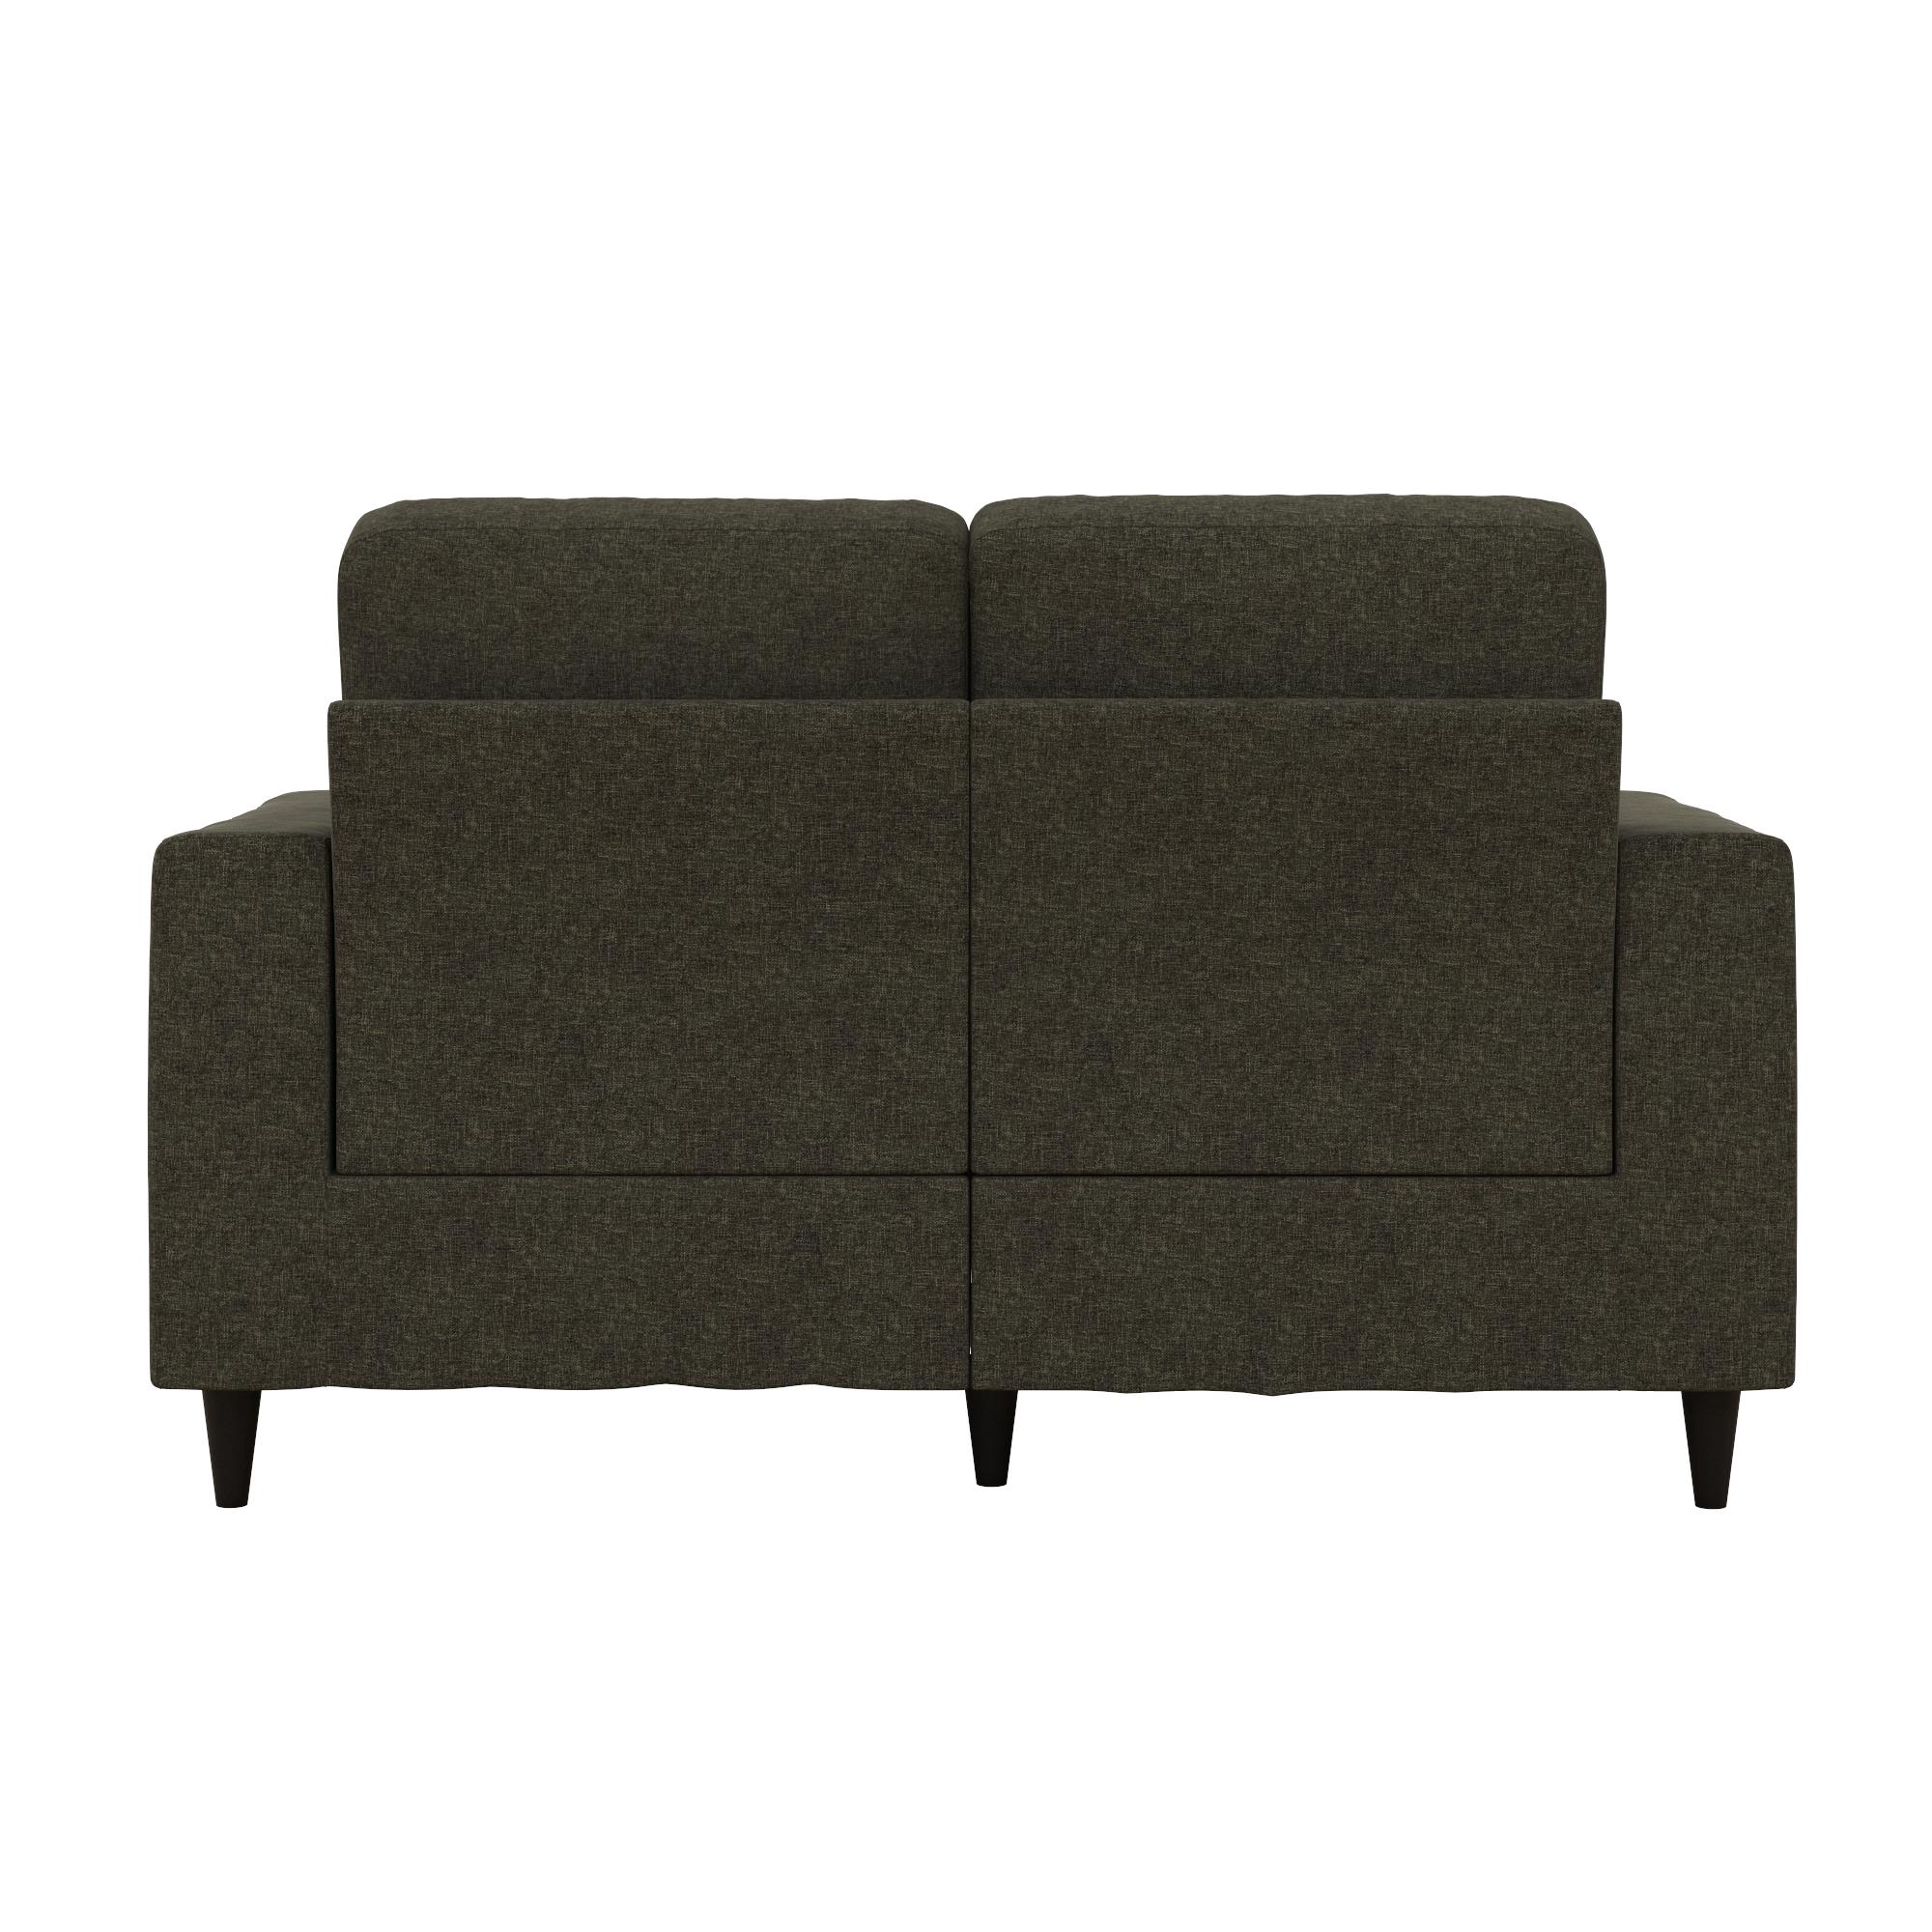 DHP Cooper Loveseat 2 Seater Sofa, Gray Linen - image 10 of 17